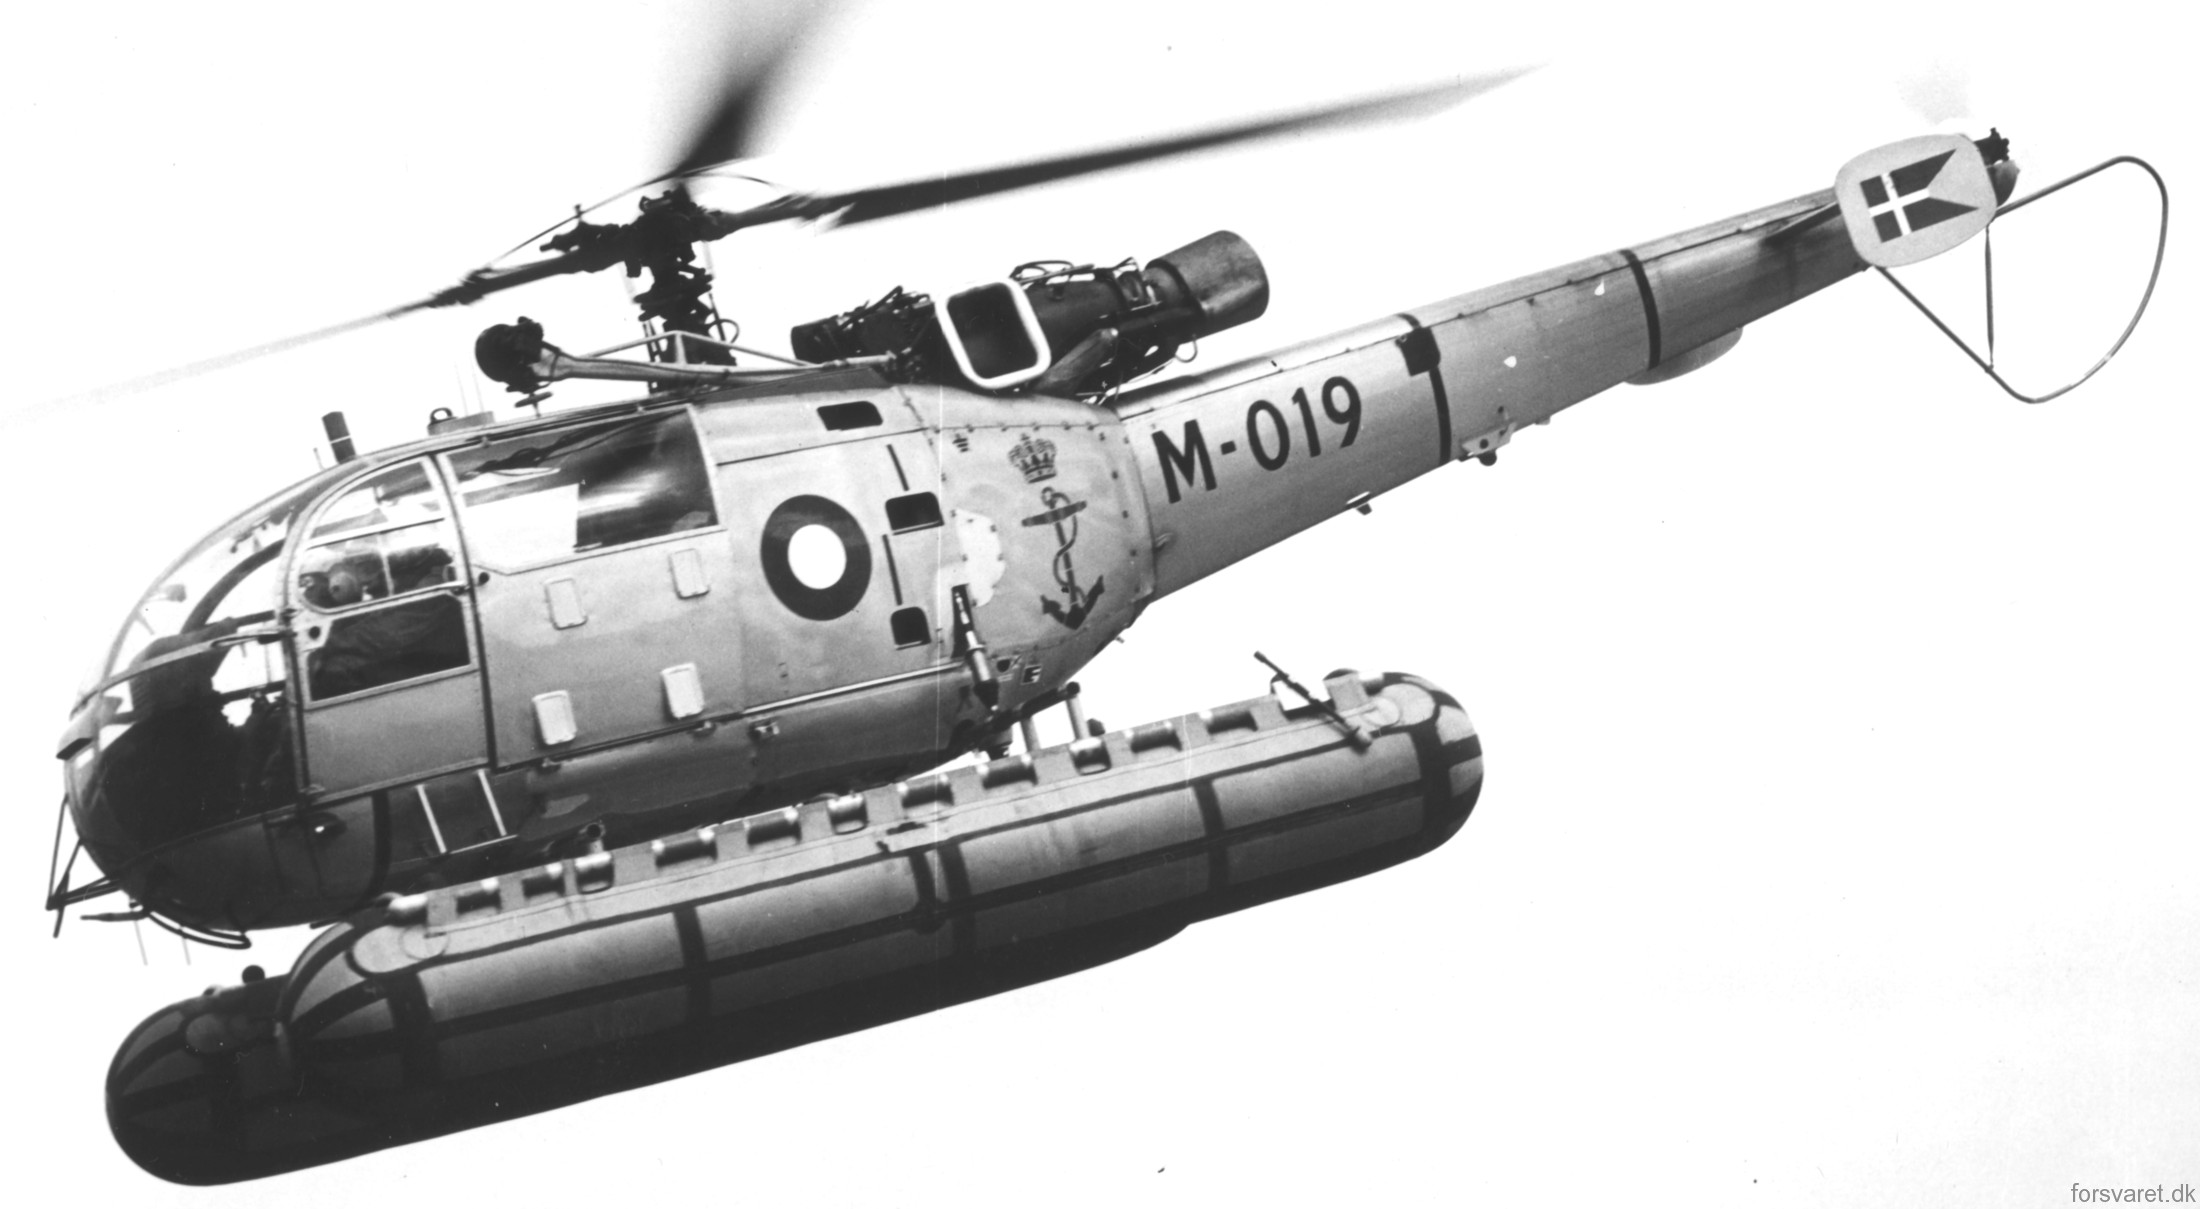 sa 316b alouette iii helicopter royal danish navy søværnet kongelige danske marine sud aviation m-019 13